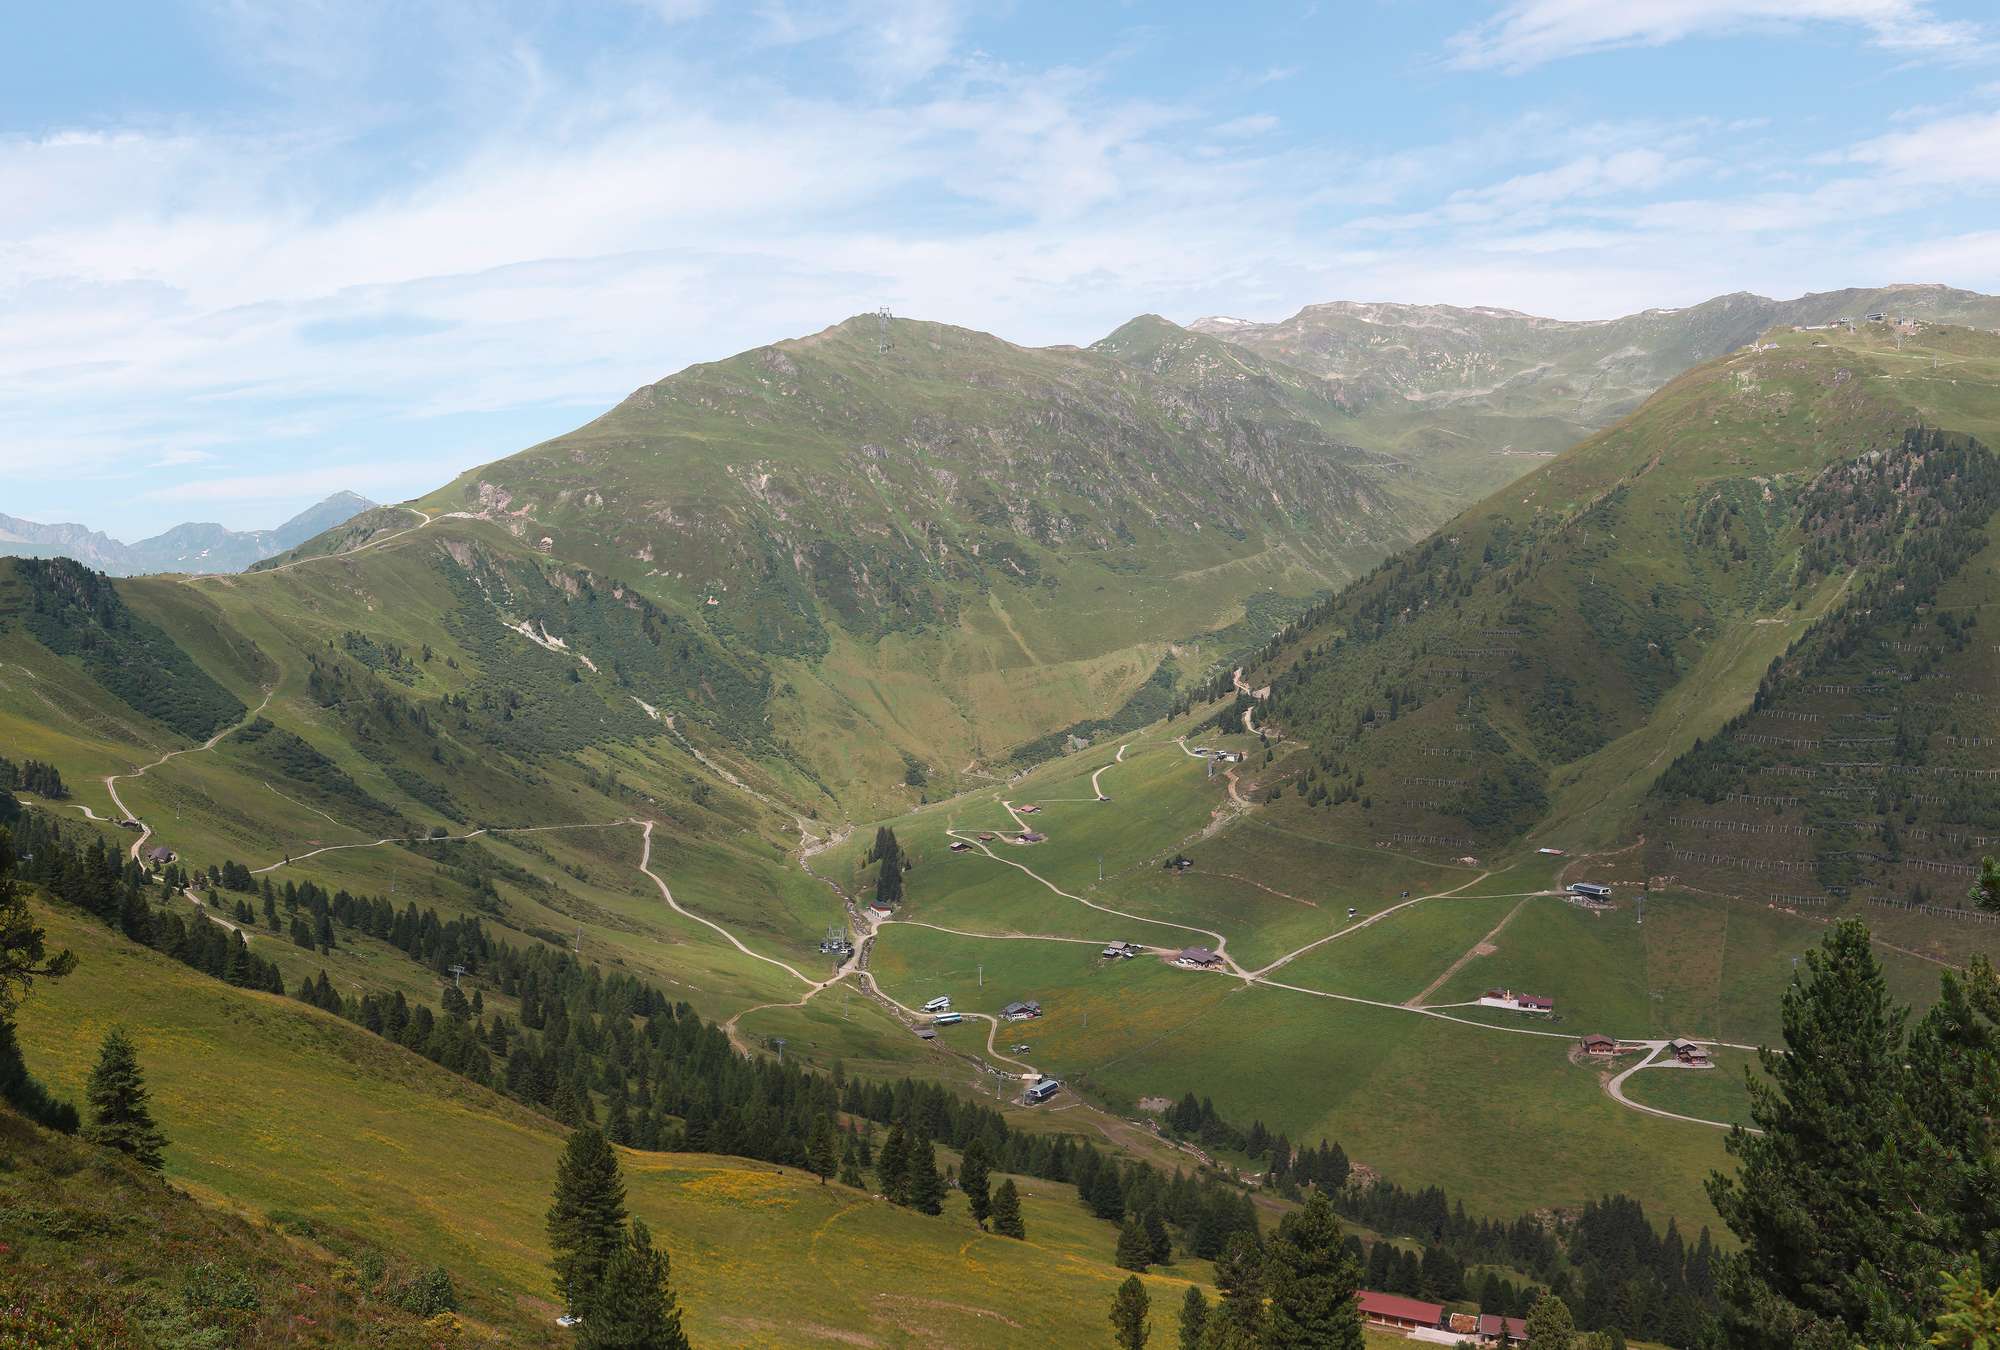             Fotomurali vista valle di prati verdi nelle Alpi
        